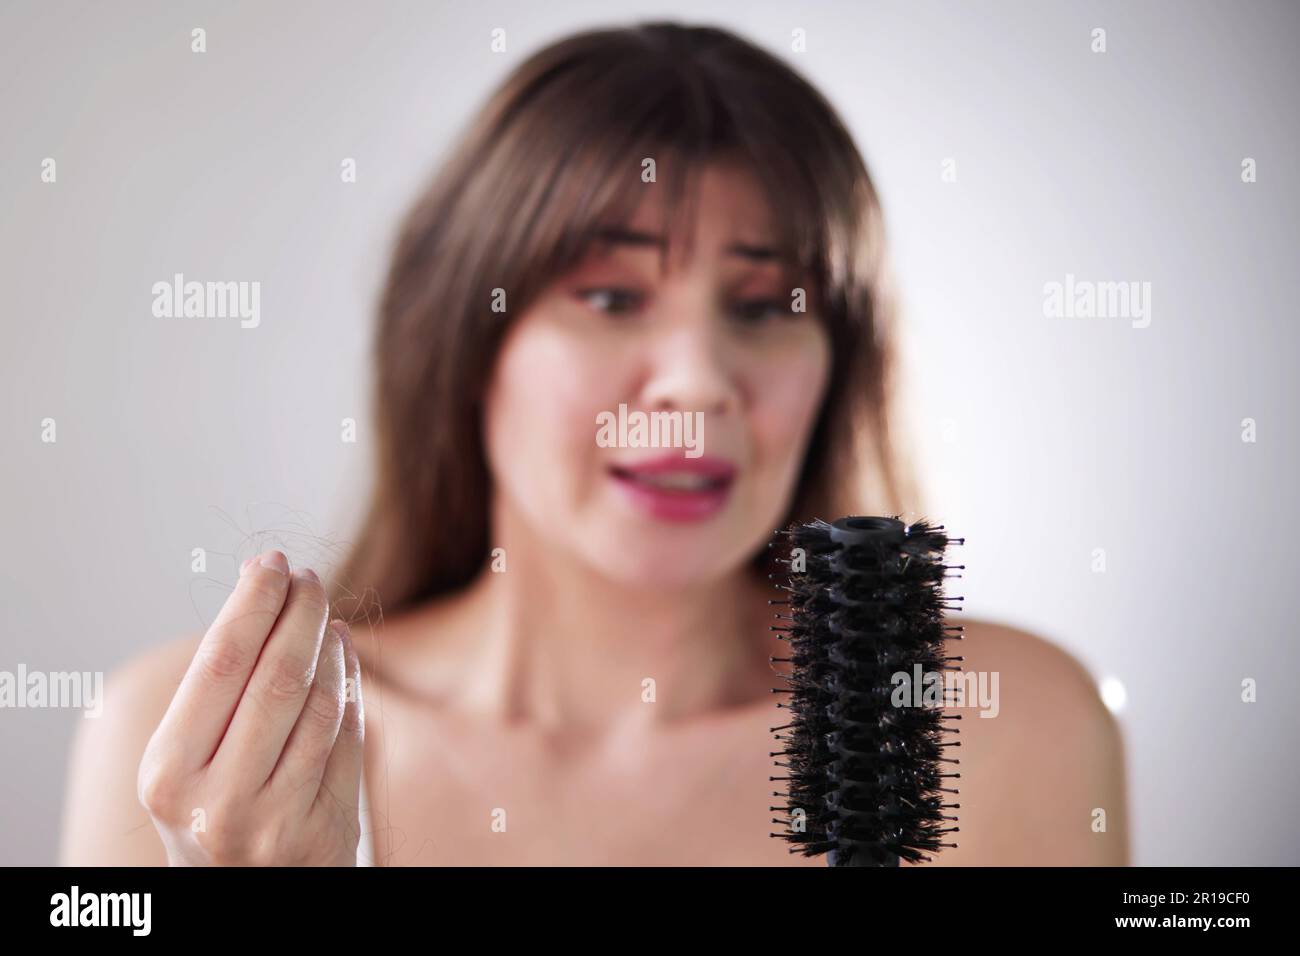 Hairfall And Hairloss. Worried Woman With Hair Loss Stock Photo